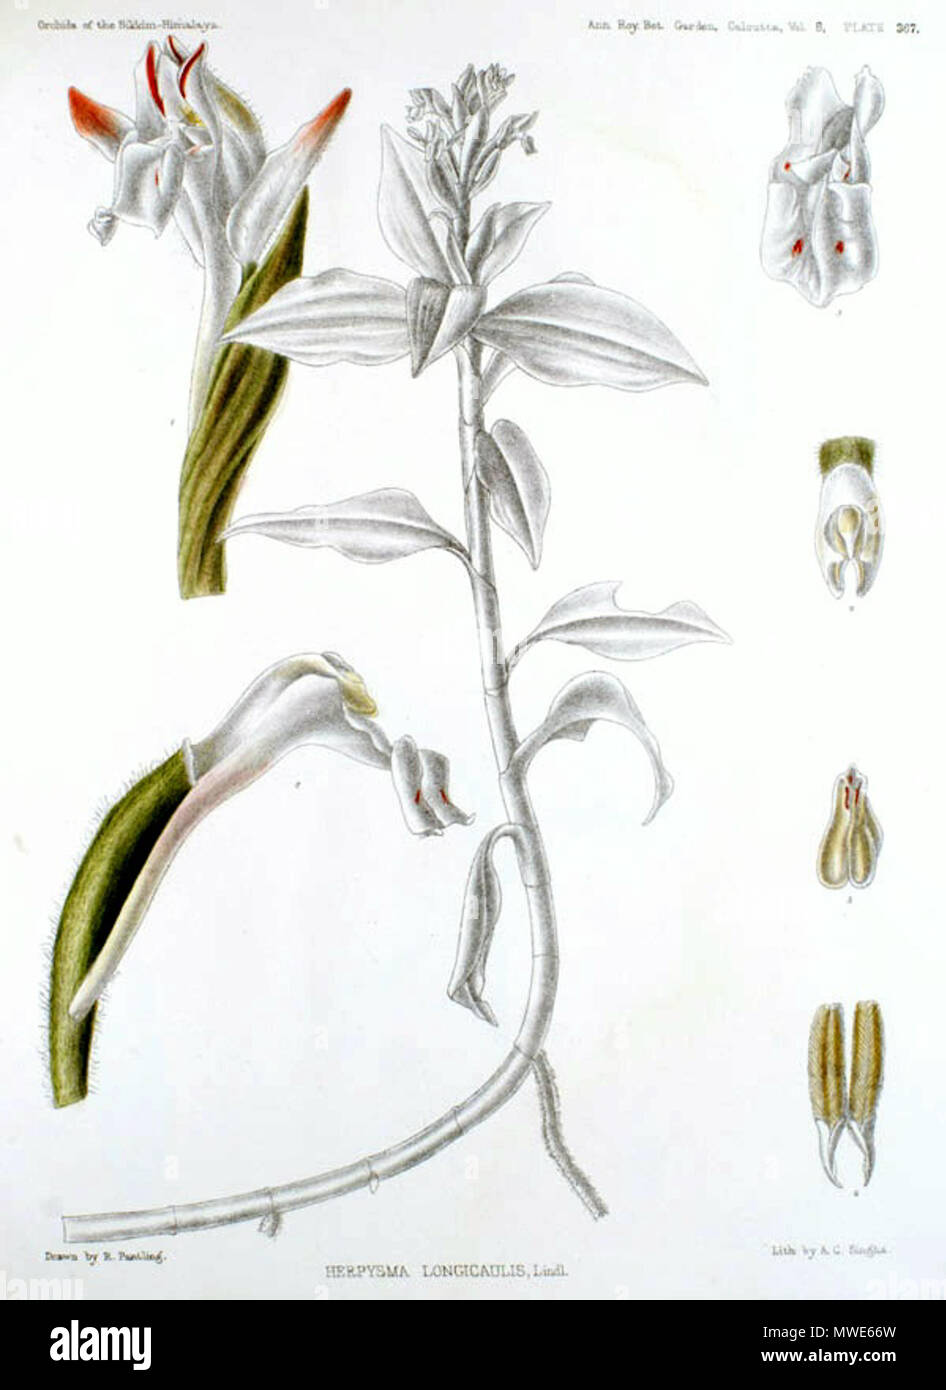 . Herpysma longicaulis . 1898. G. King and R. Pantling, «The Orchids of the Sikkim-Himalaya» 276 Herpysma longicaulis - The Orchids of the Sikkim-Himalaya pl 367 (1898) Stock Photo